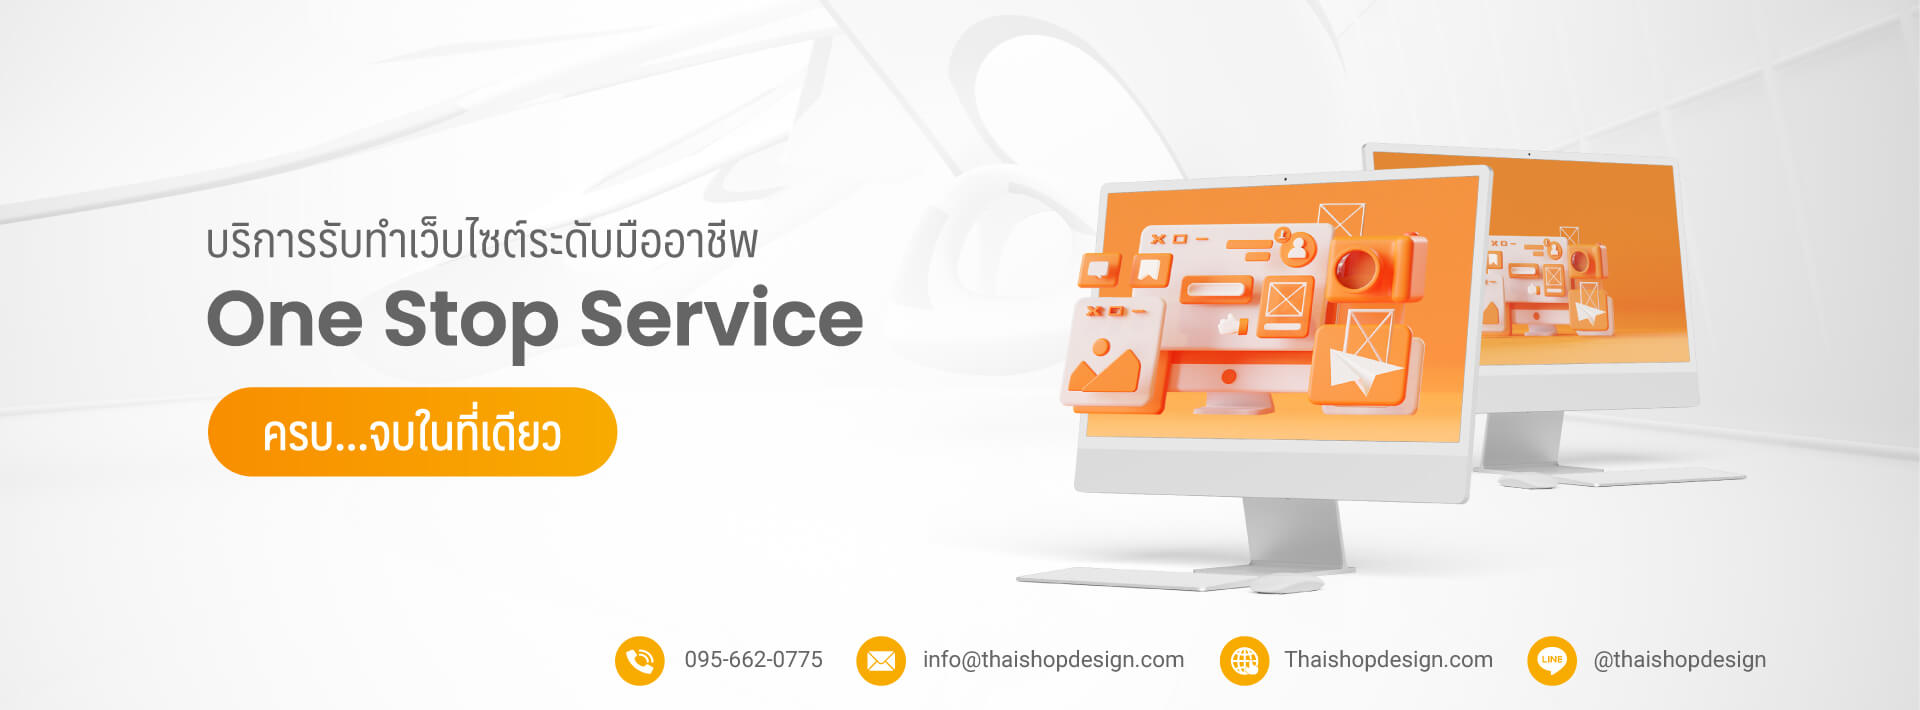 ThaishopDesign รับทำเว็บไซต์บริษัท ธุรกิจ องค์กร ด้วย WordPress